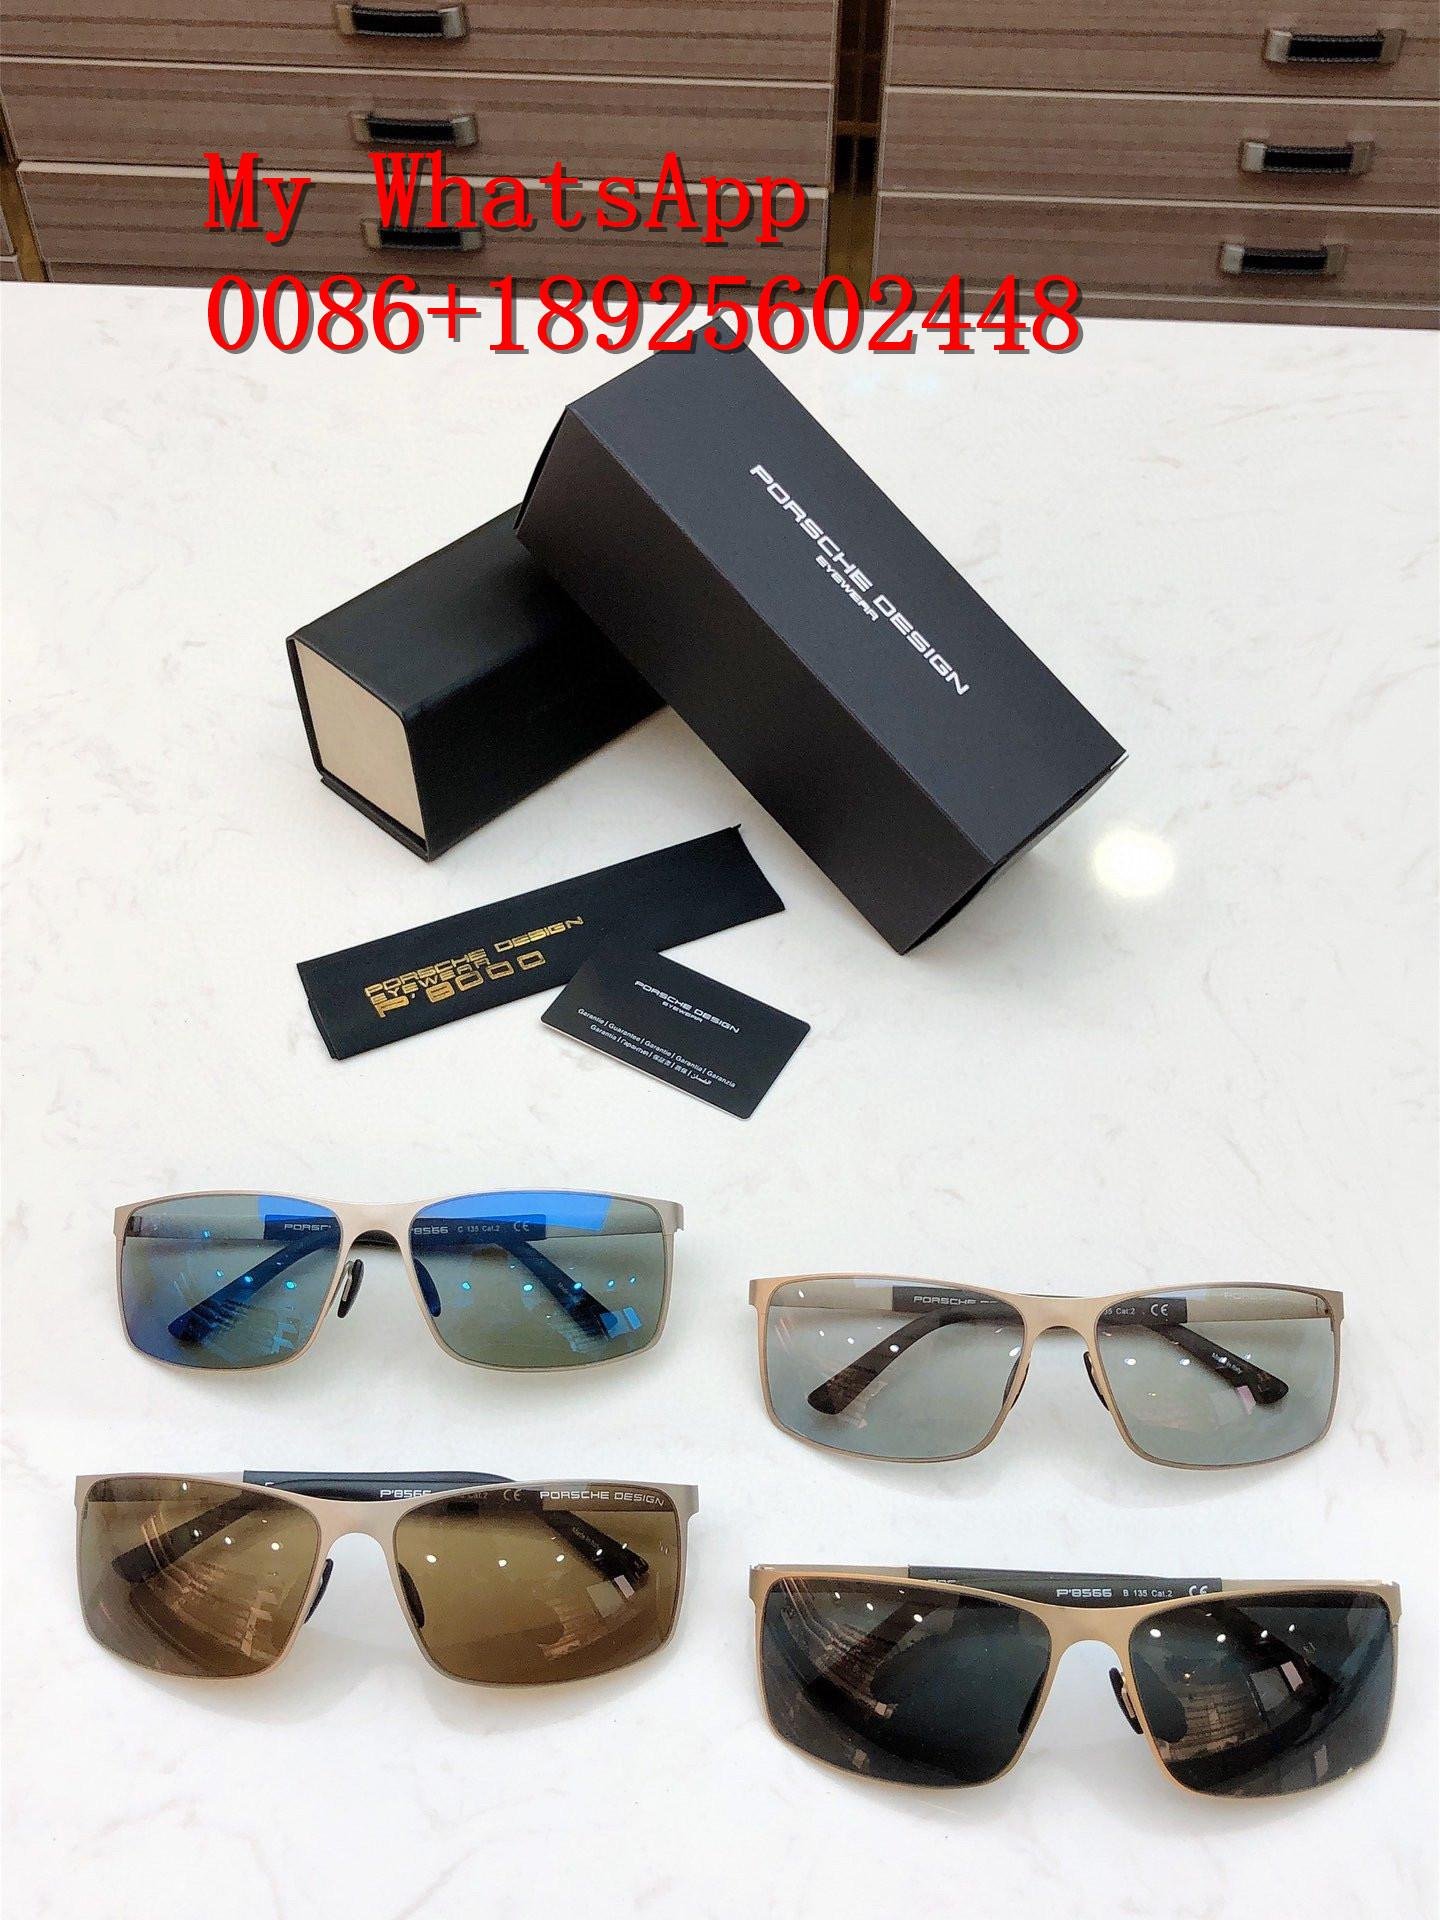 Wholesale PORSCHE sunglasses Porsche  glasses1:1 quality sunglasses  5